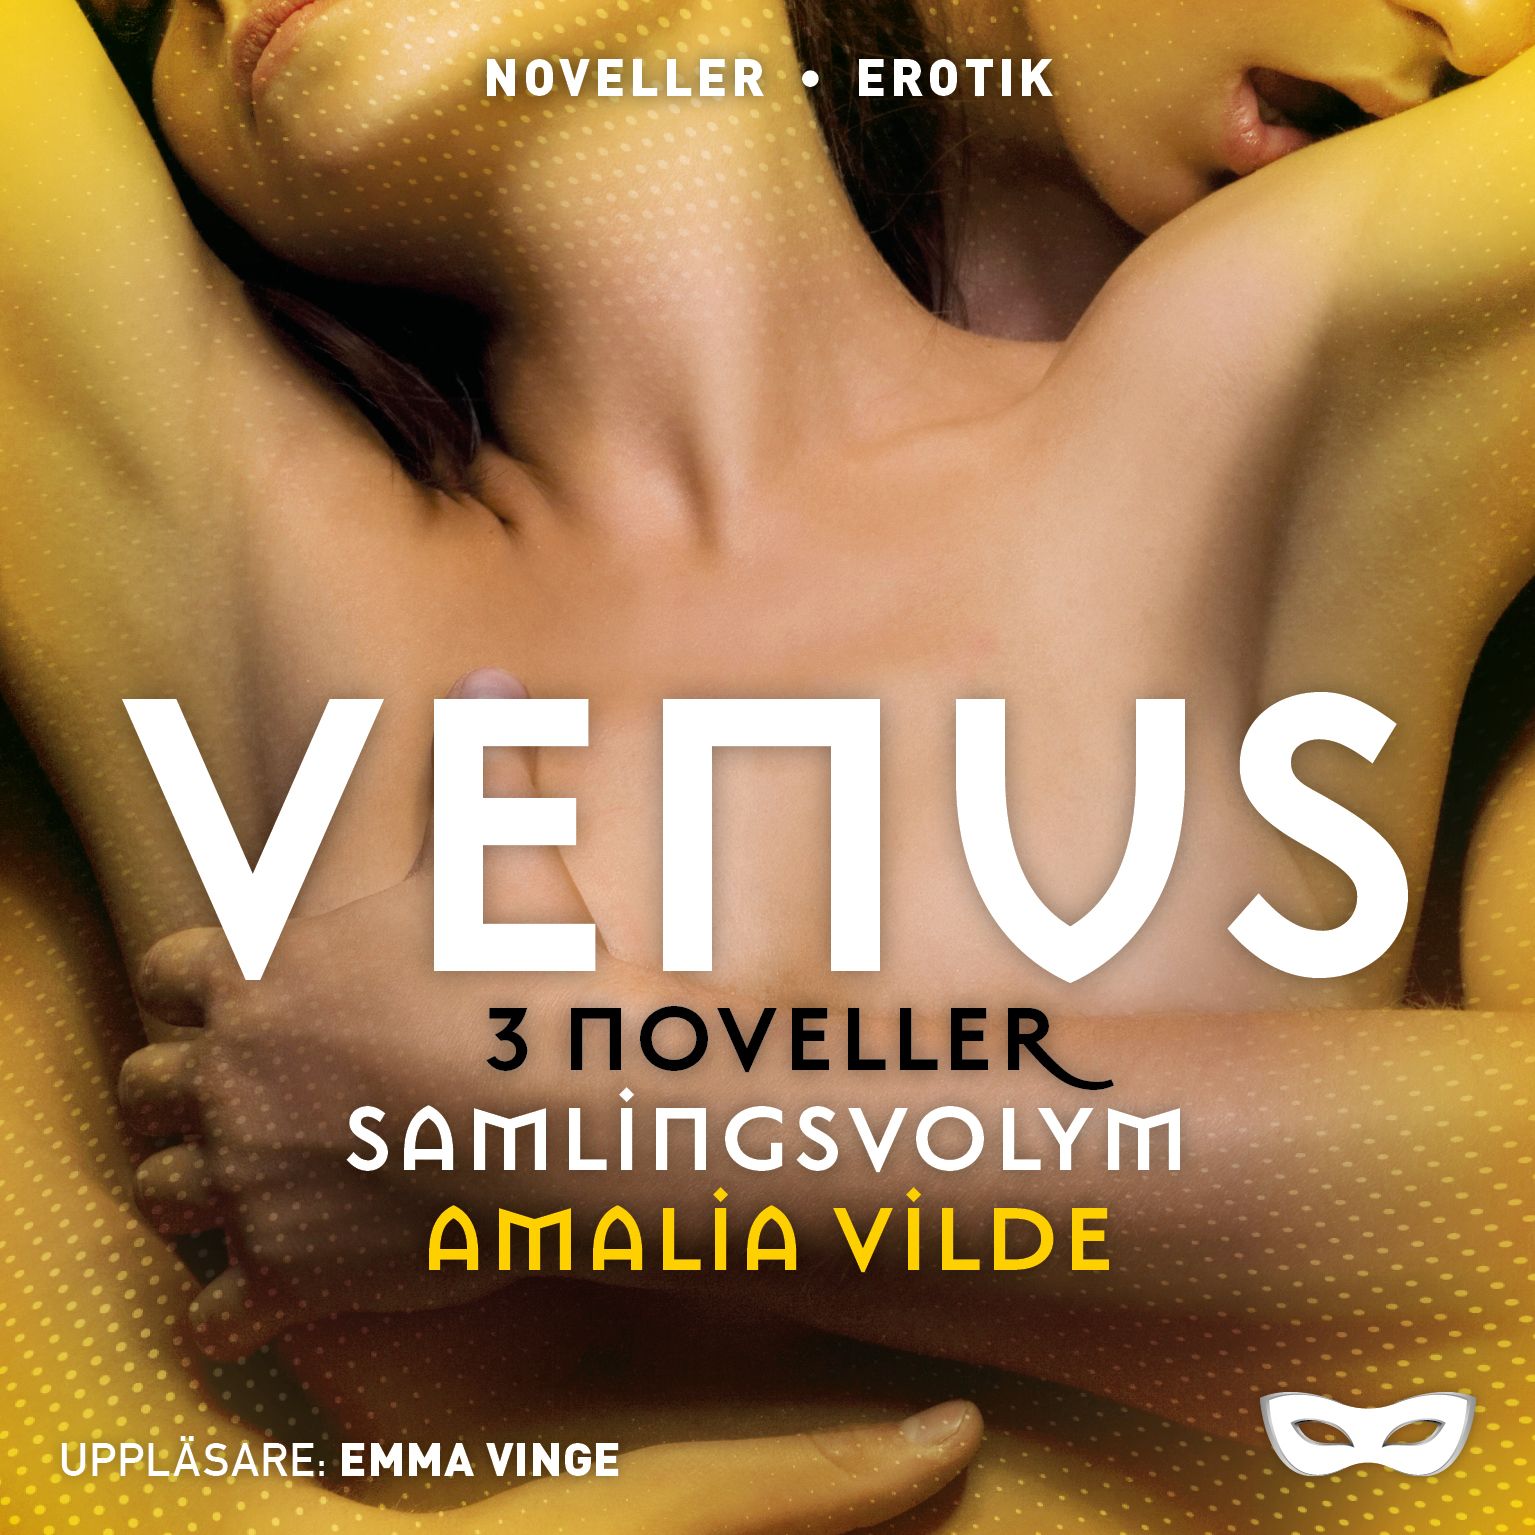 Venus 3 noveller (samlingsvolym), audiobook by Amalia Vilde